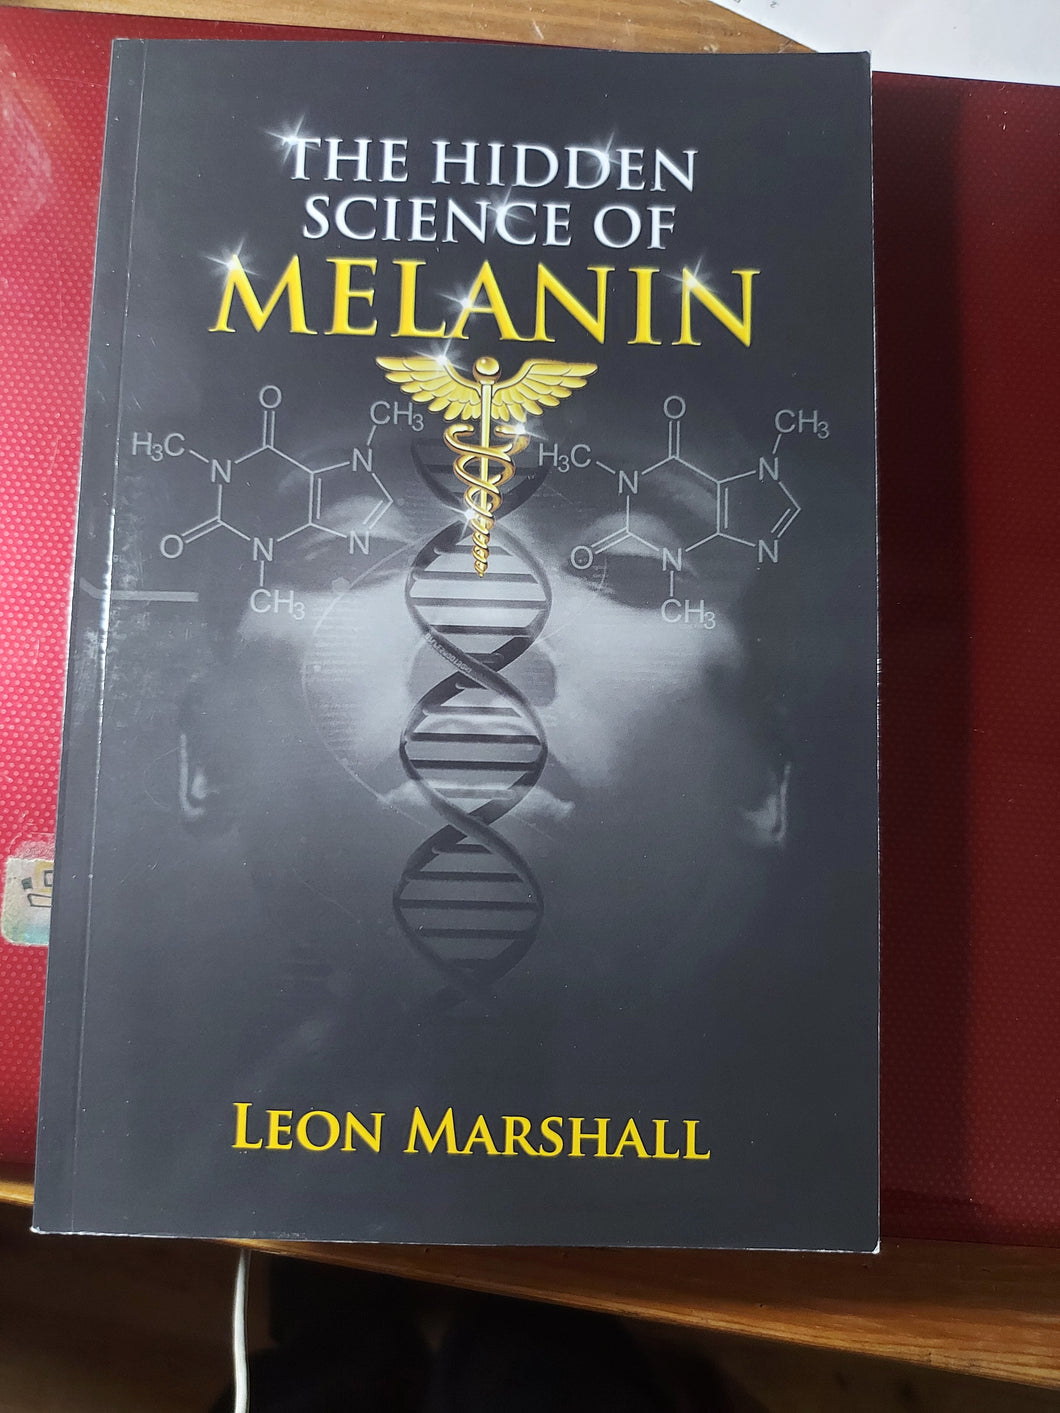 The Hidden Science of Melanin by Leon Marshall